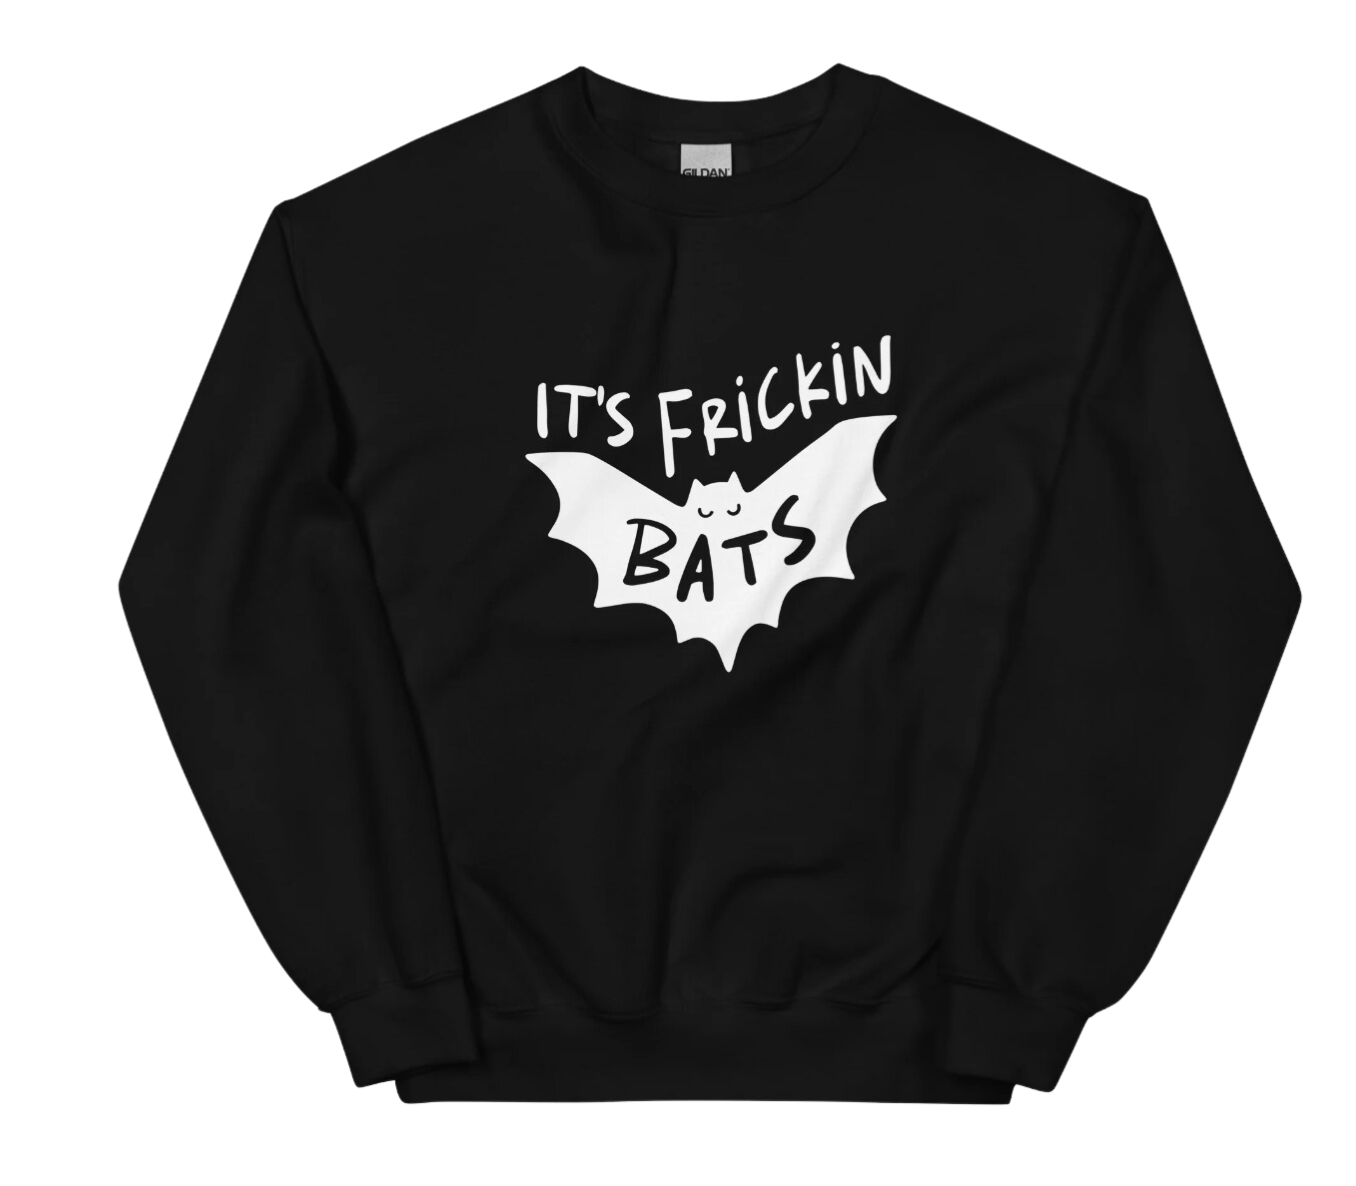 It's Frickin Bats Unisex Sweatshirt